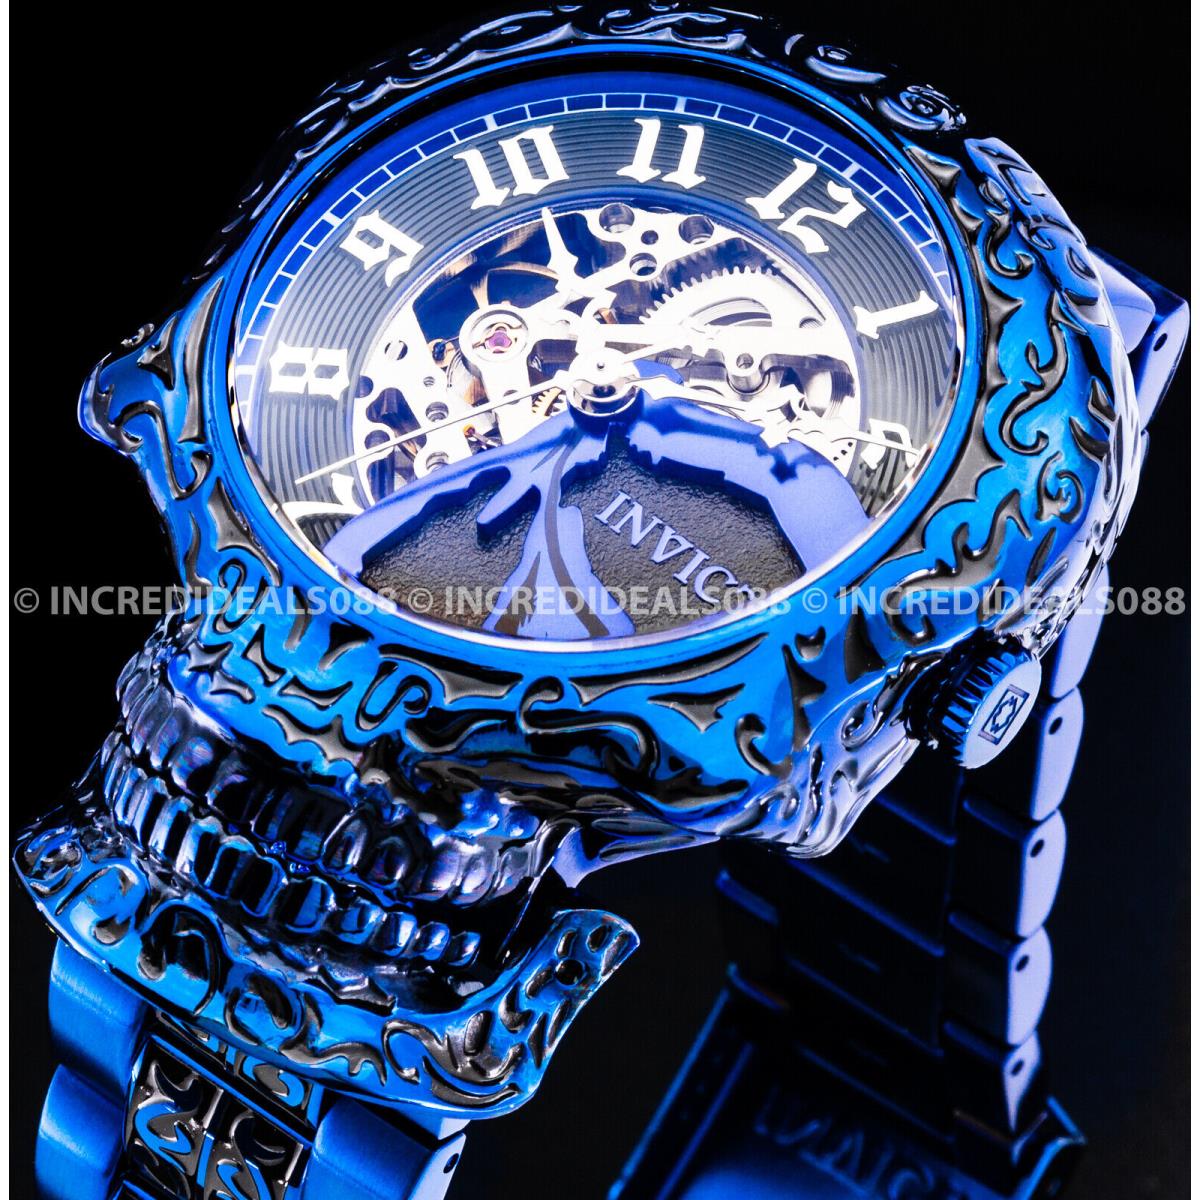 Invicta Automatic Skull Artist Skeletonized Dial Blue Label Men Rare Watch Reloj - Dial: Black, Band: Blue, Bezel: Blue